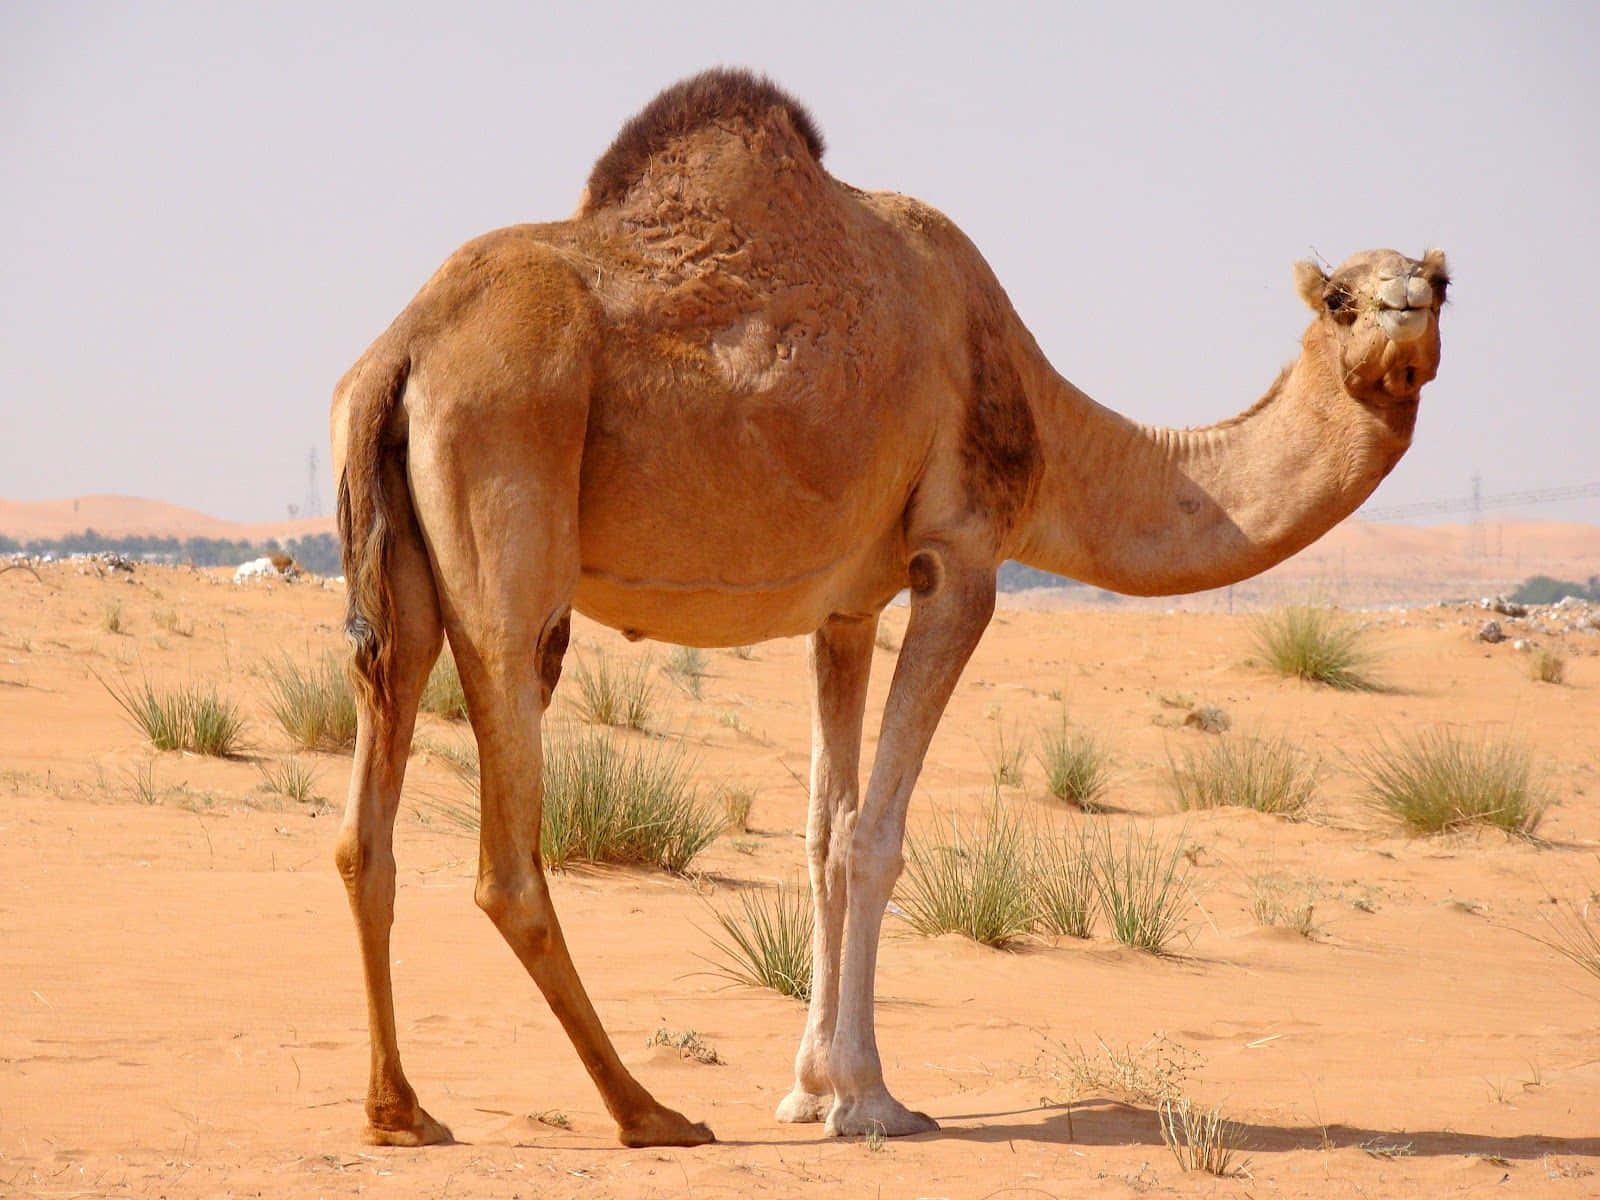 A gracefully posed Arabian Camel in its natural habitat